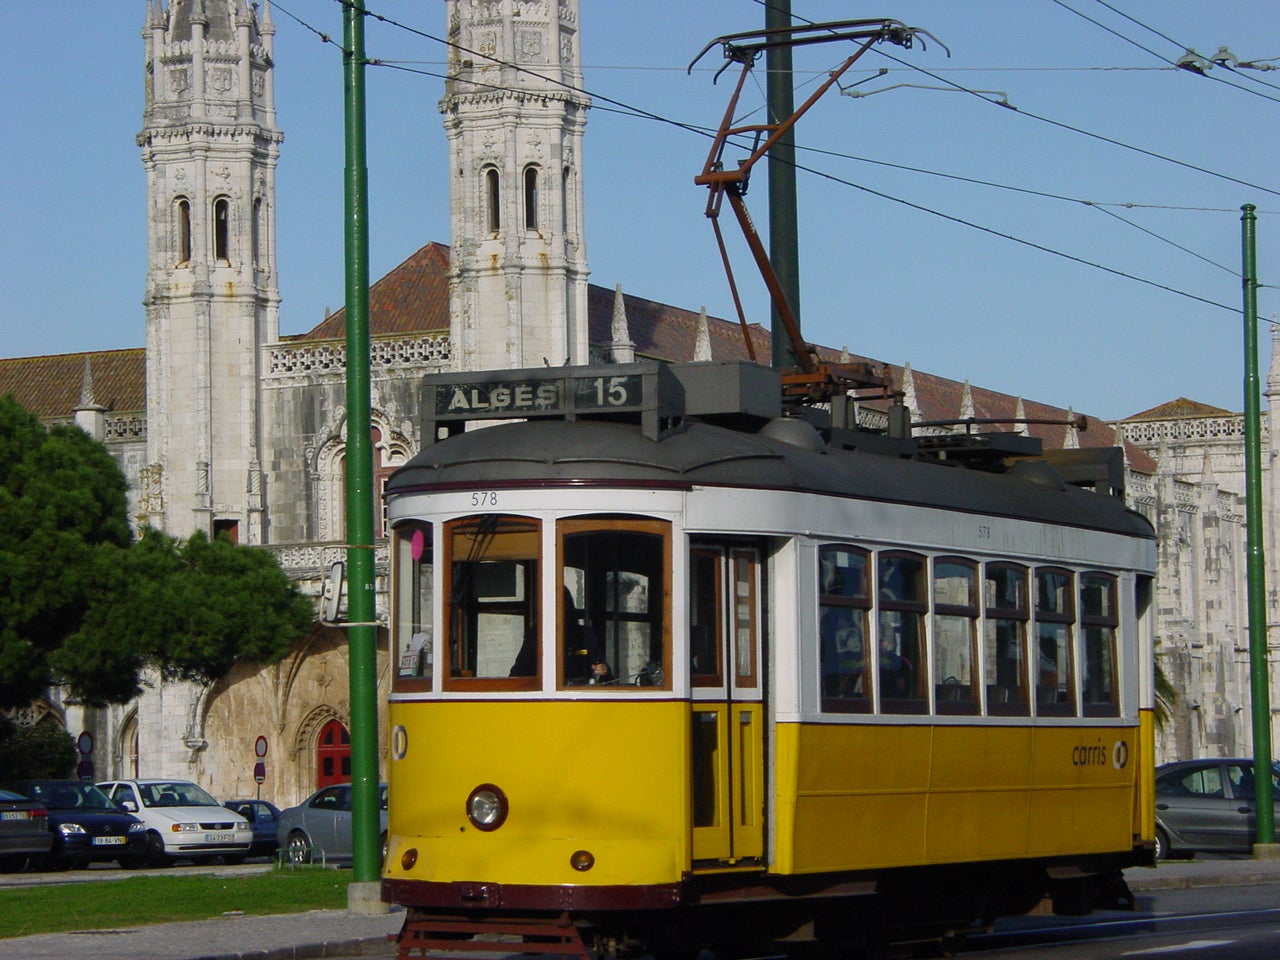 Welcome sight: Tram 28 in Lisbon